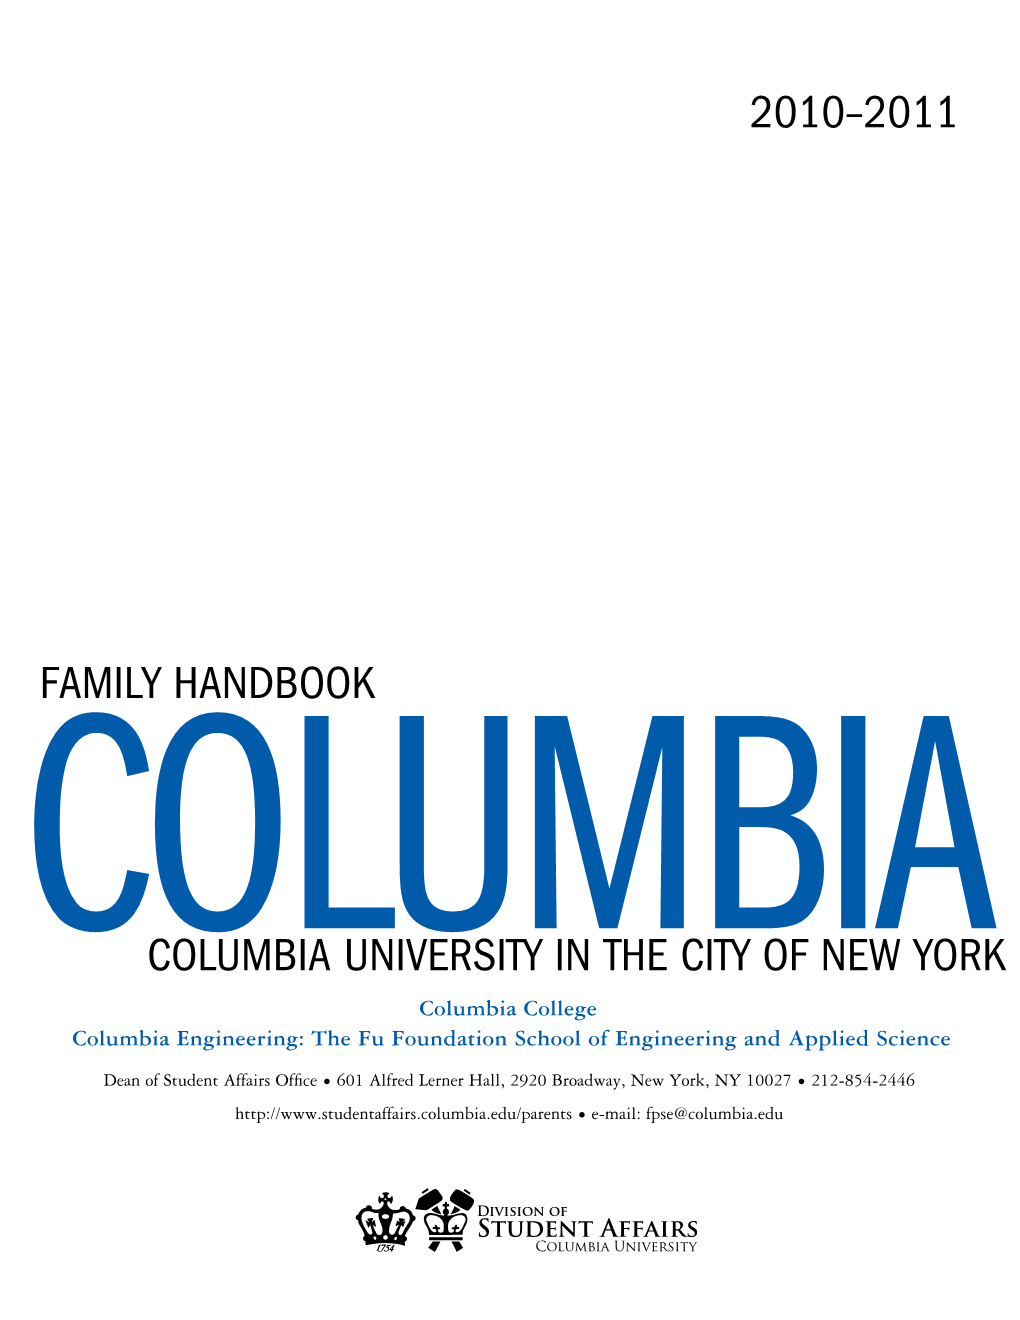 Columbia University Family Handbook 2010